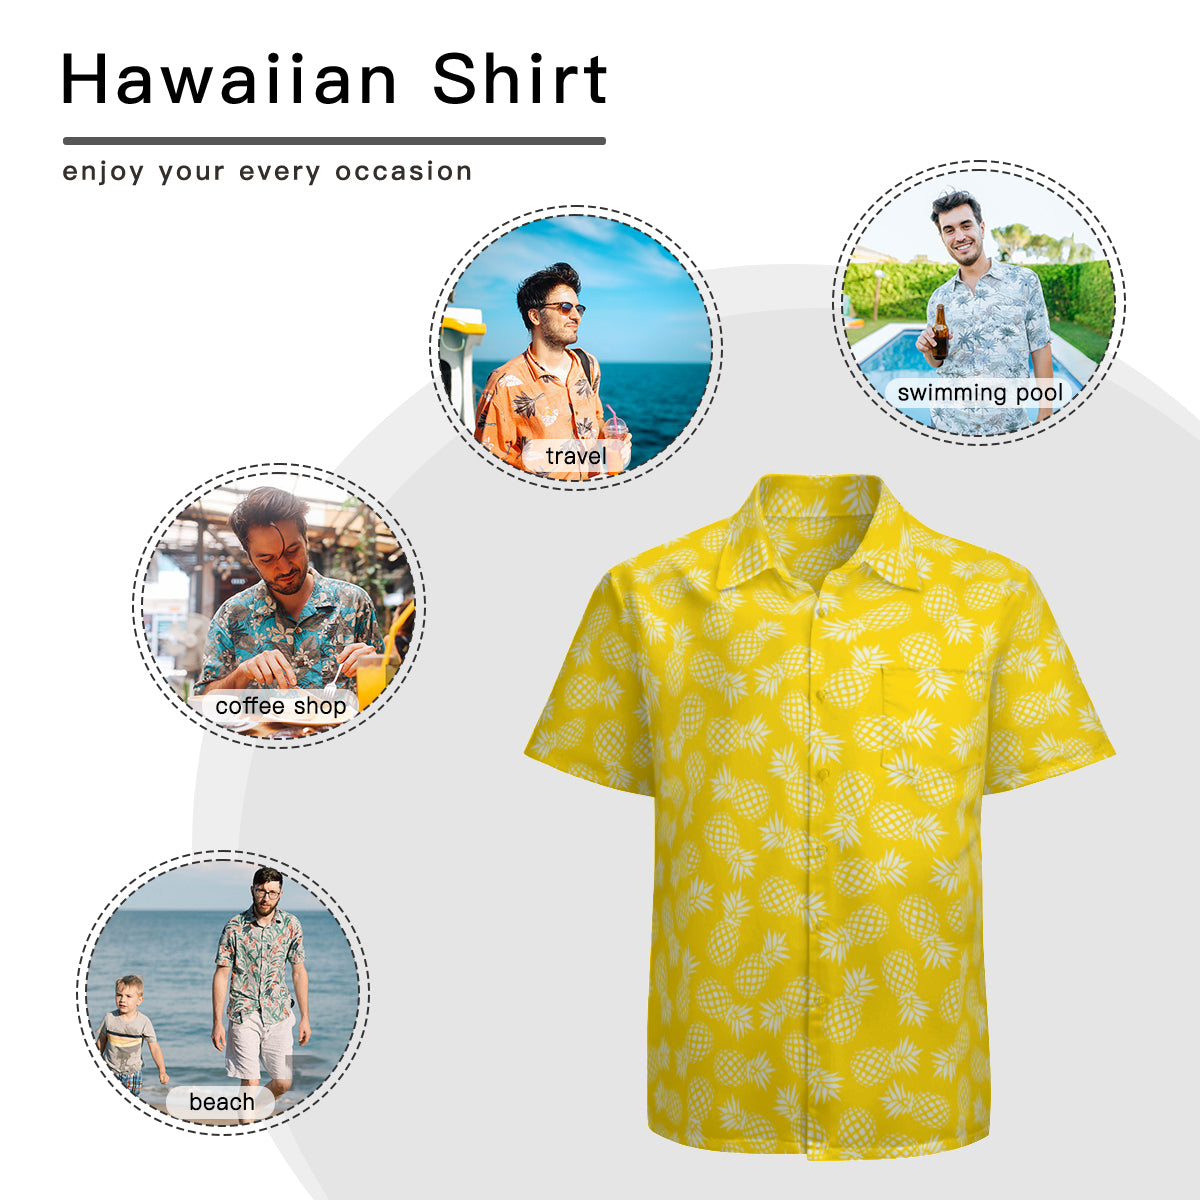 Pineapple Shirt Men, Hawaiian Shirt Men, Tropical Shirt Men, Neon Yellow Shirt Men, Pineapple Top men, Spring Summer Top Men, Neon Shirt Men